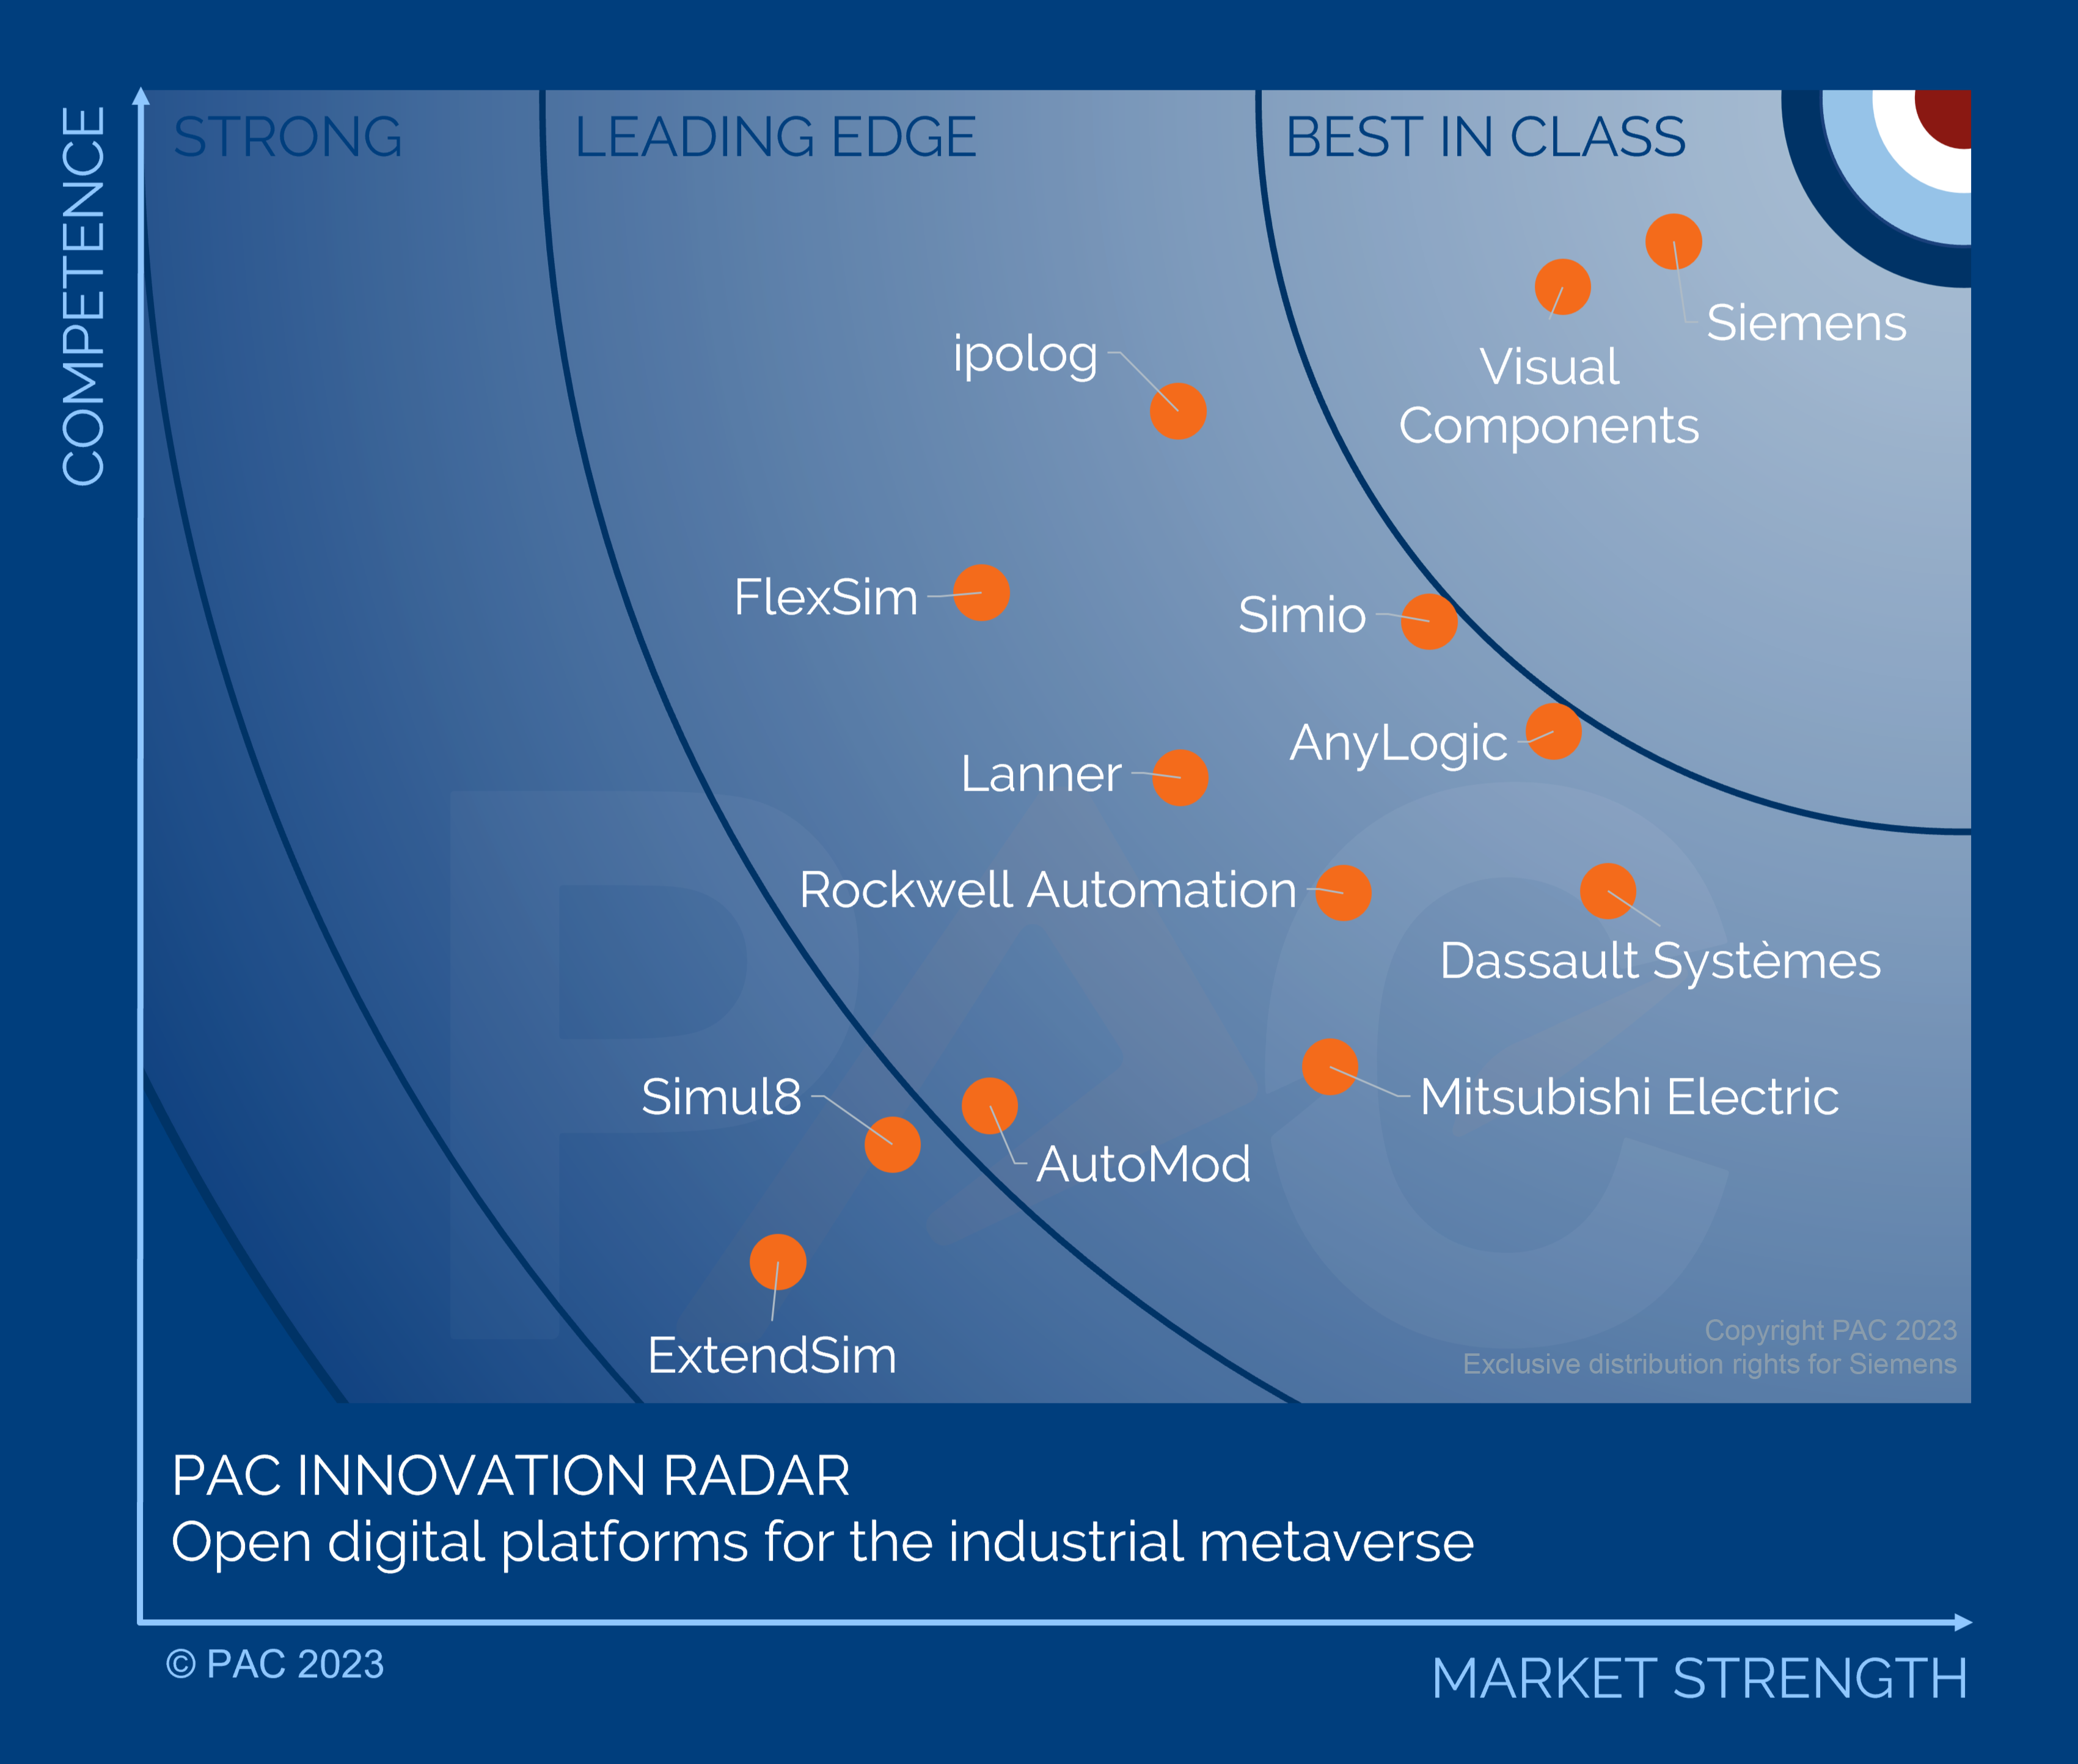 PAC RADAR Open Digital Platforms 2023 Industrial Metaverse ranking graph.